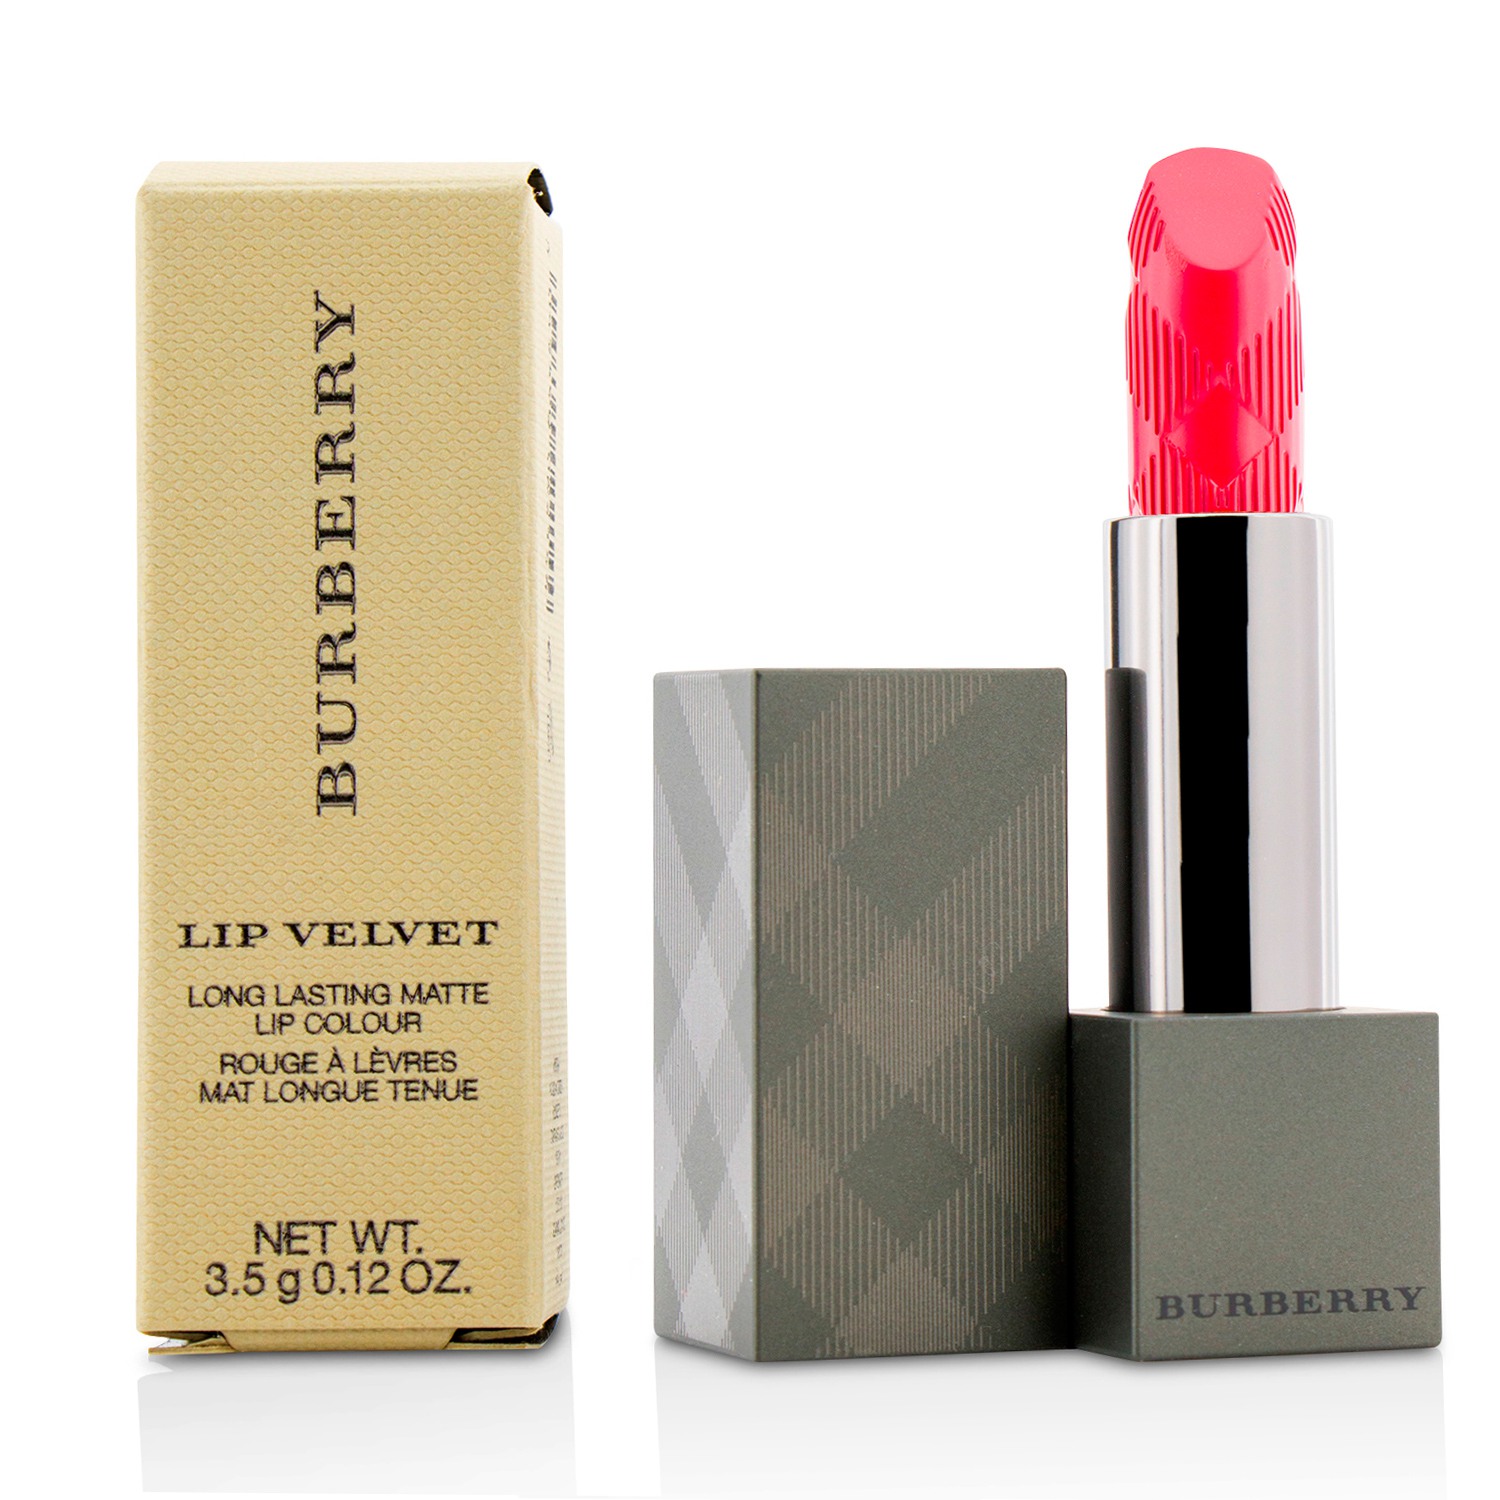 Lip Velvet Long Lasting Matte Lip Colour - # No. 419 Magenta Pink Burberry Image